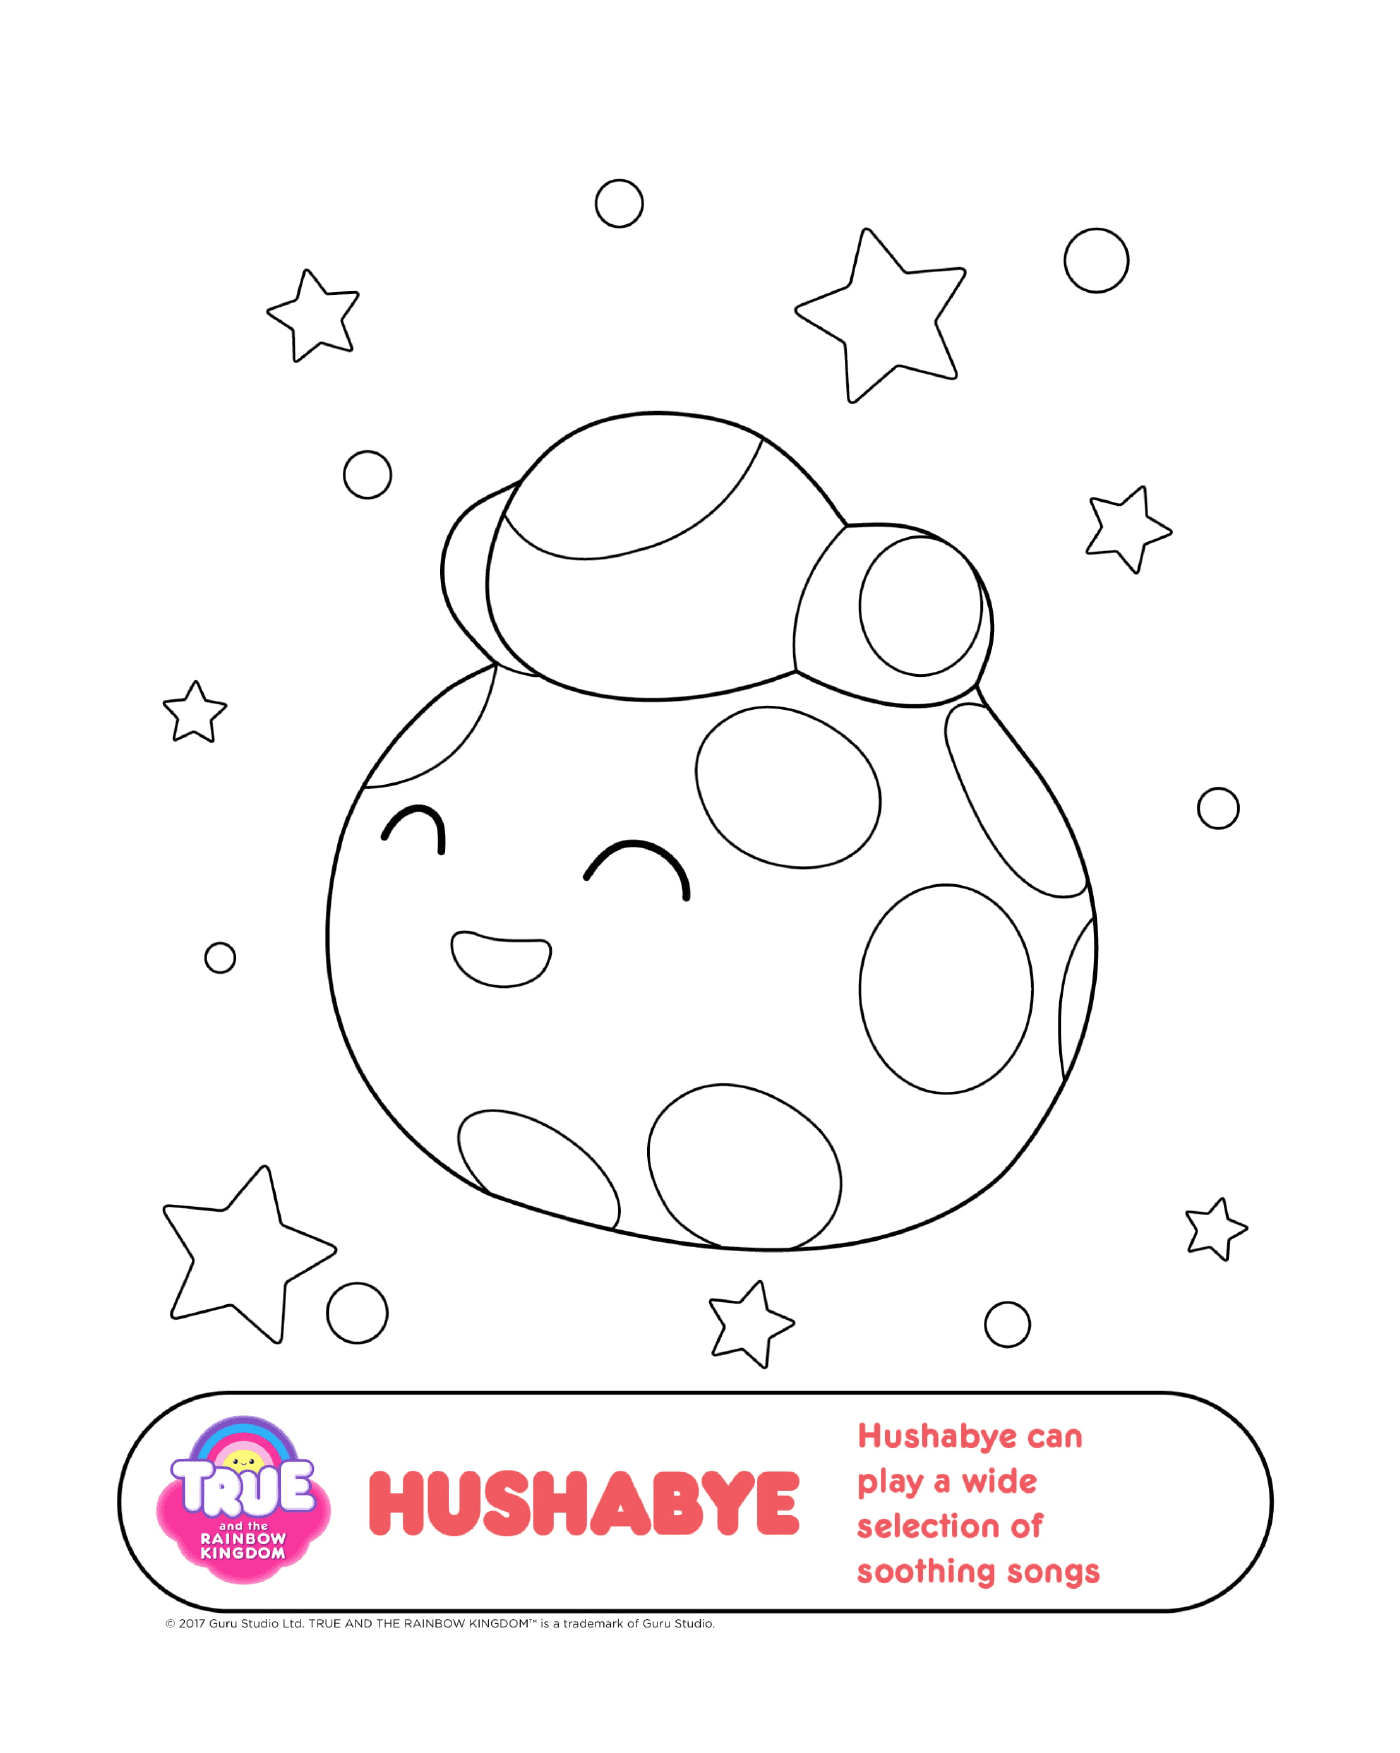  Hushabye, a moon 